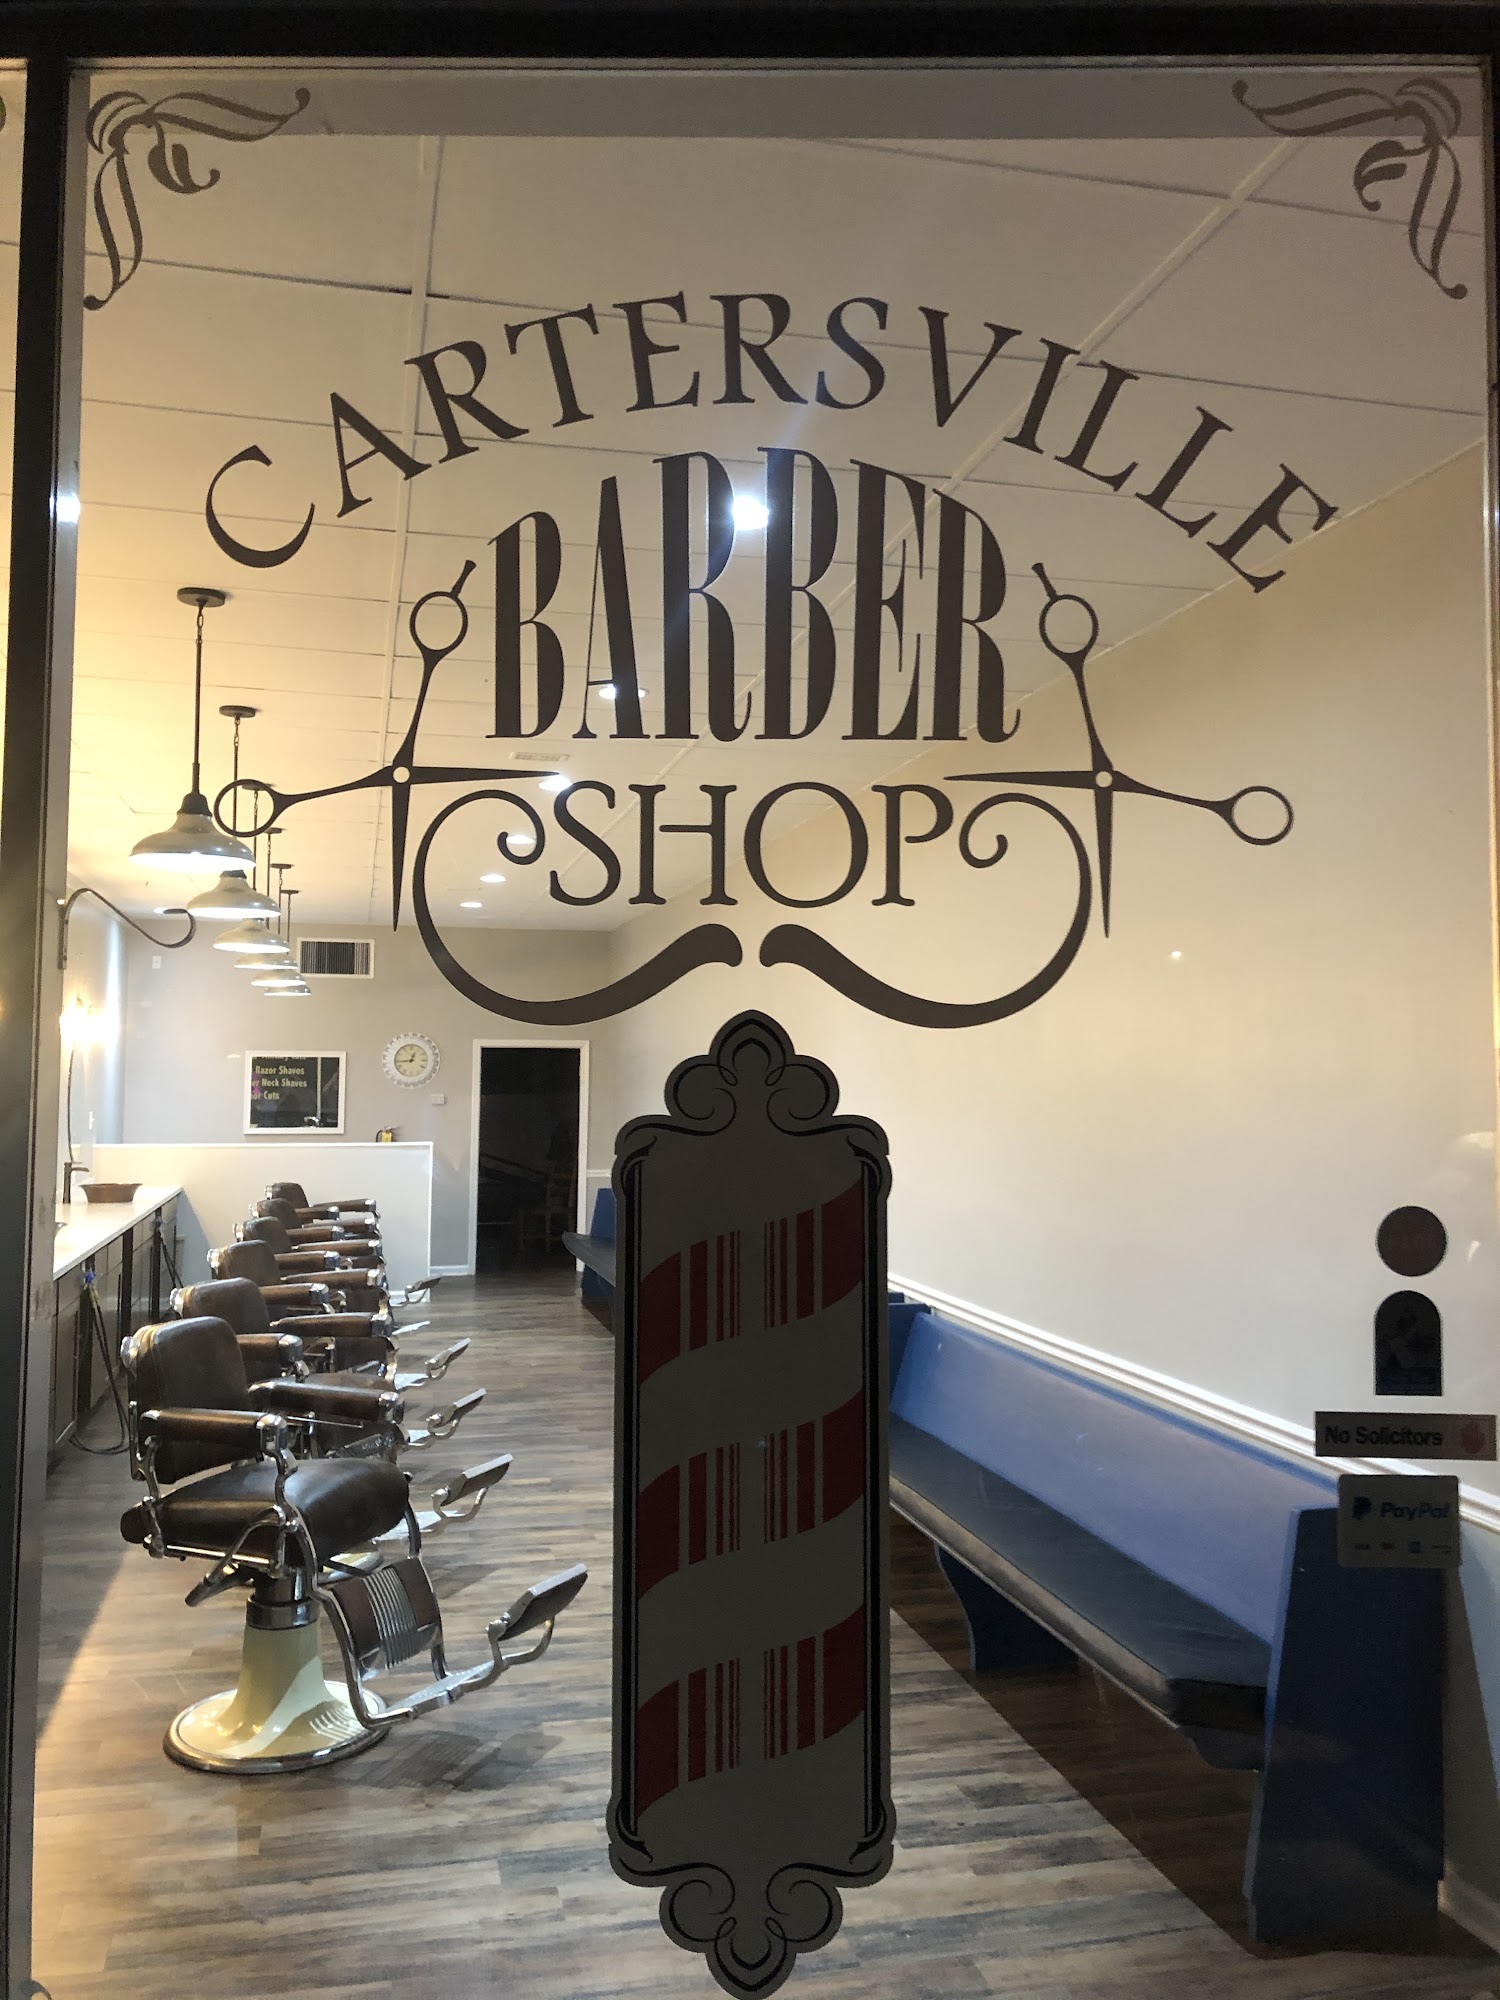 Cartersville Barber Shop